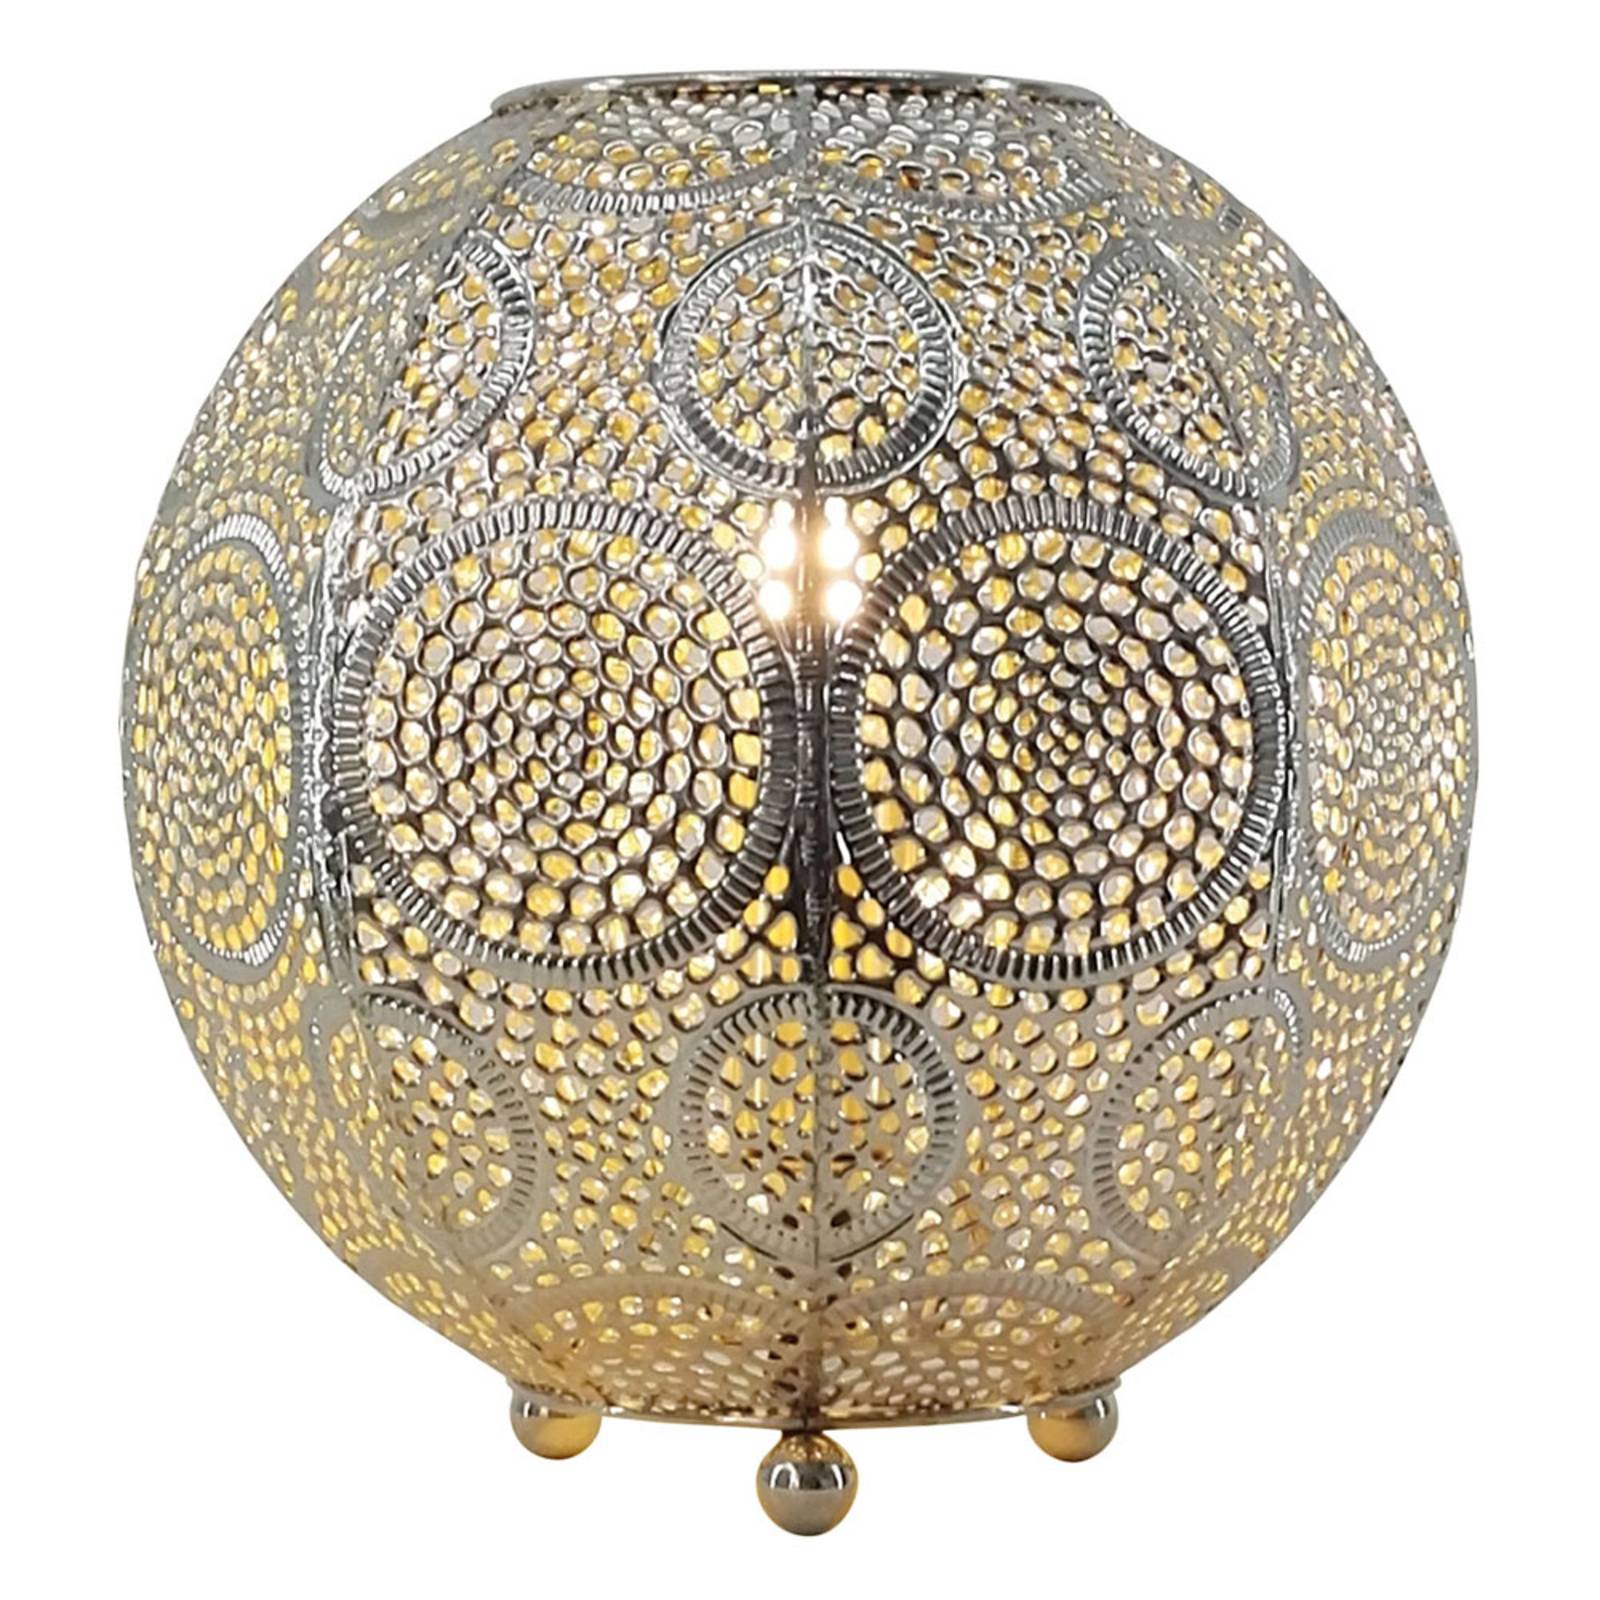 Asztali lámpa Stampa, gömb alakú, magassága 22 cm